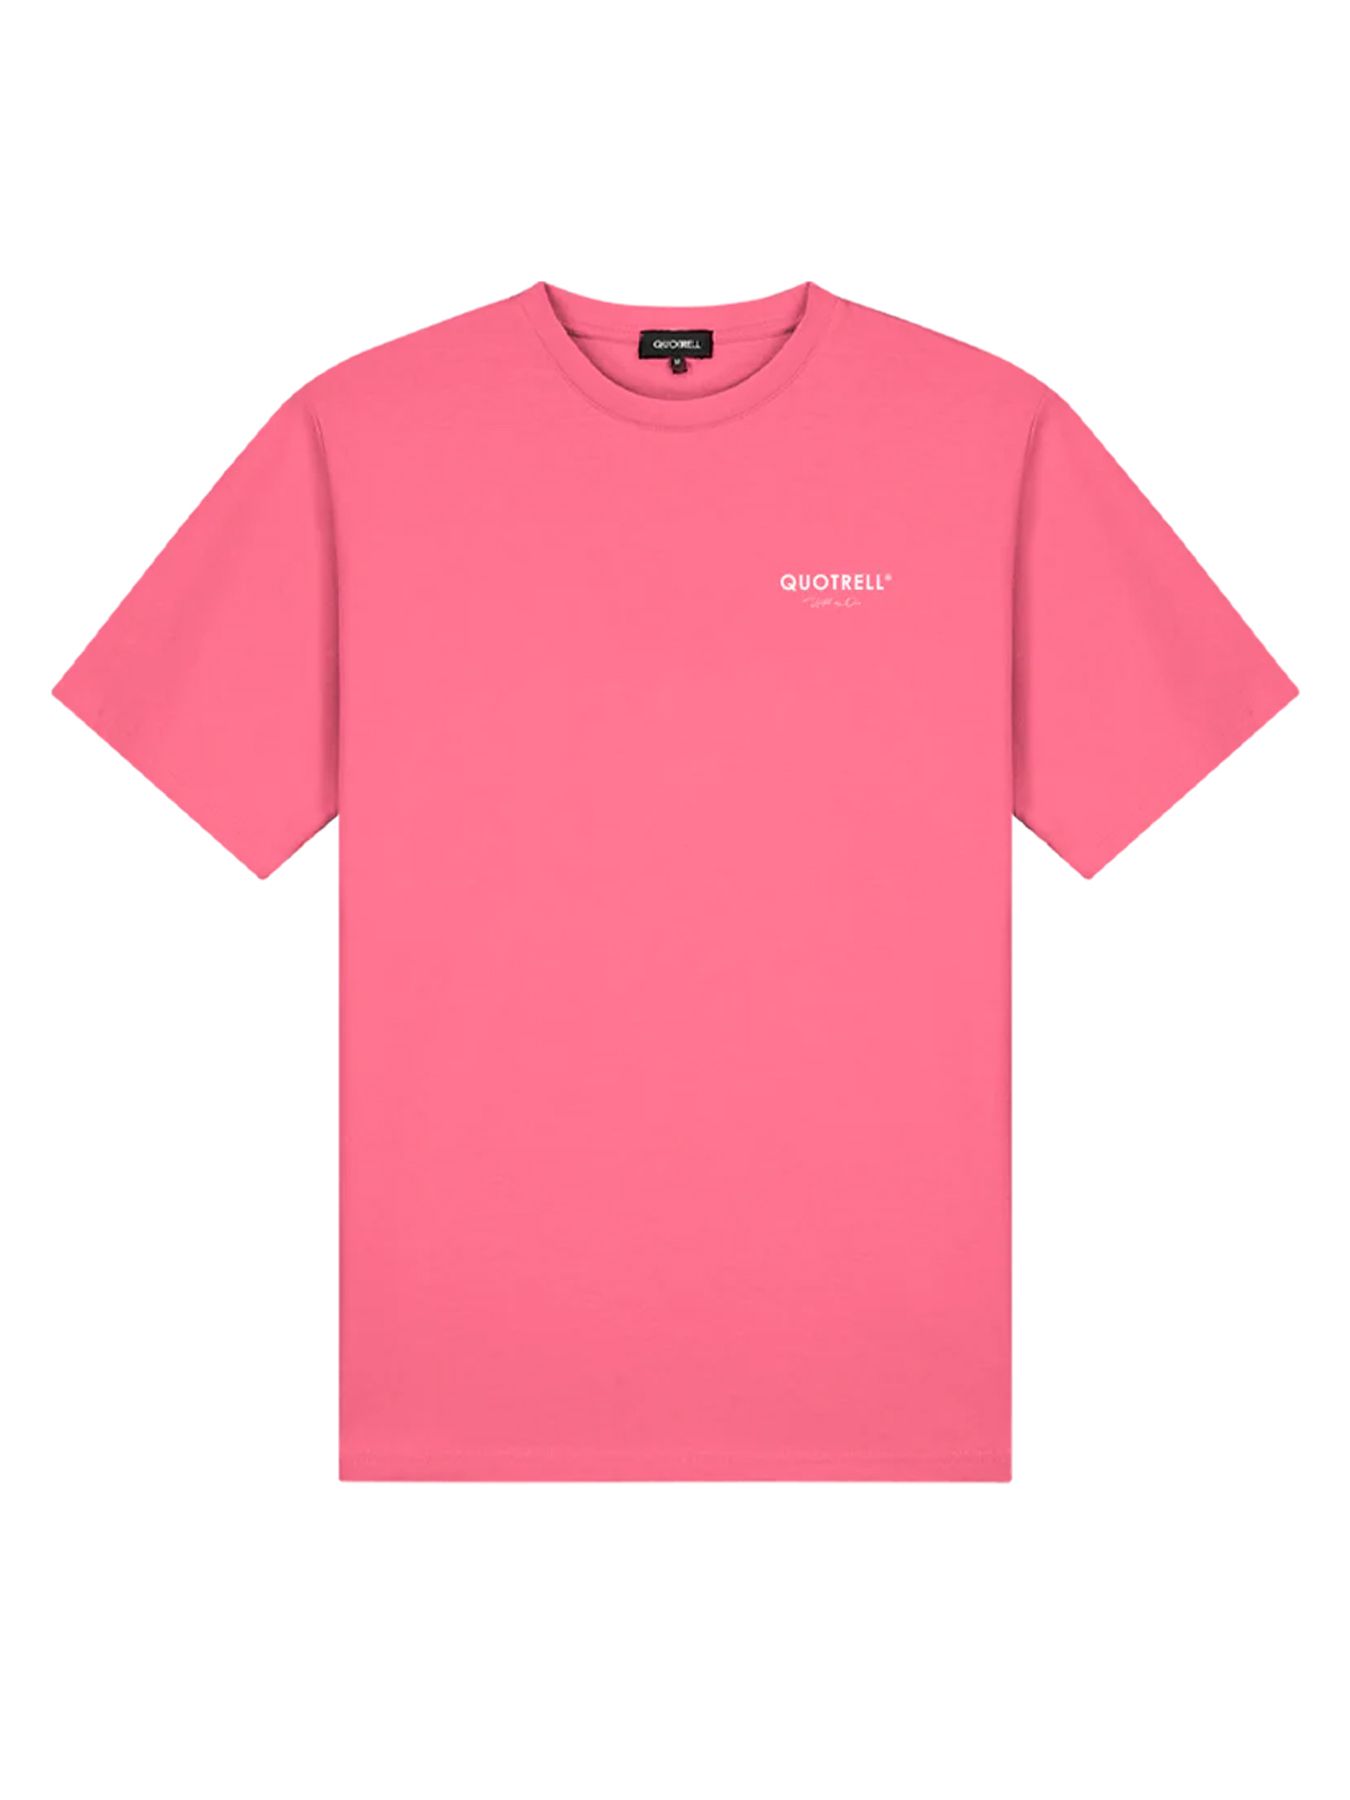 Quotrell Jaipur t-shirt Pink/White 00104045-PWI